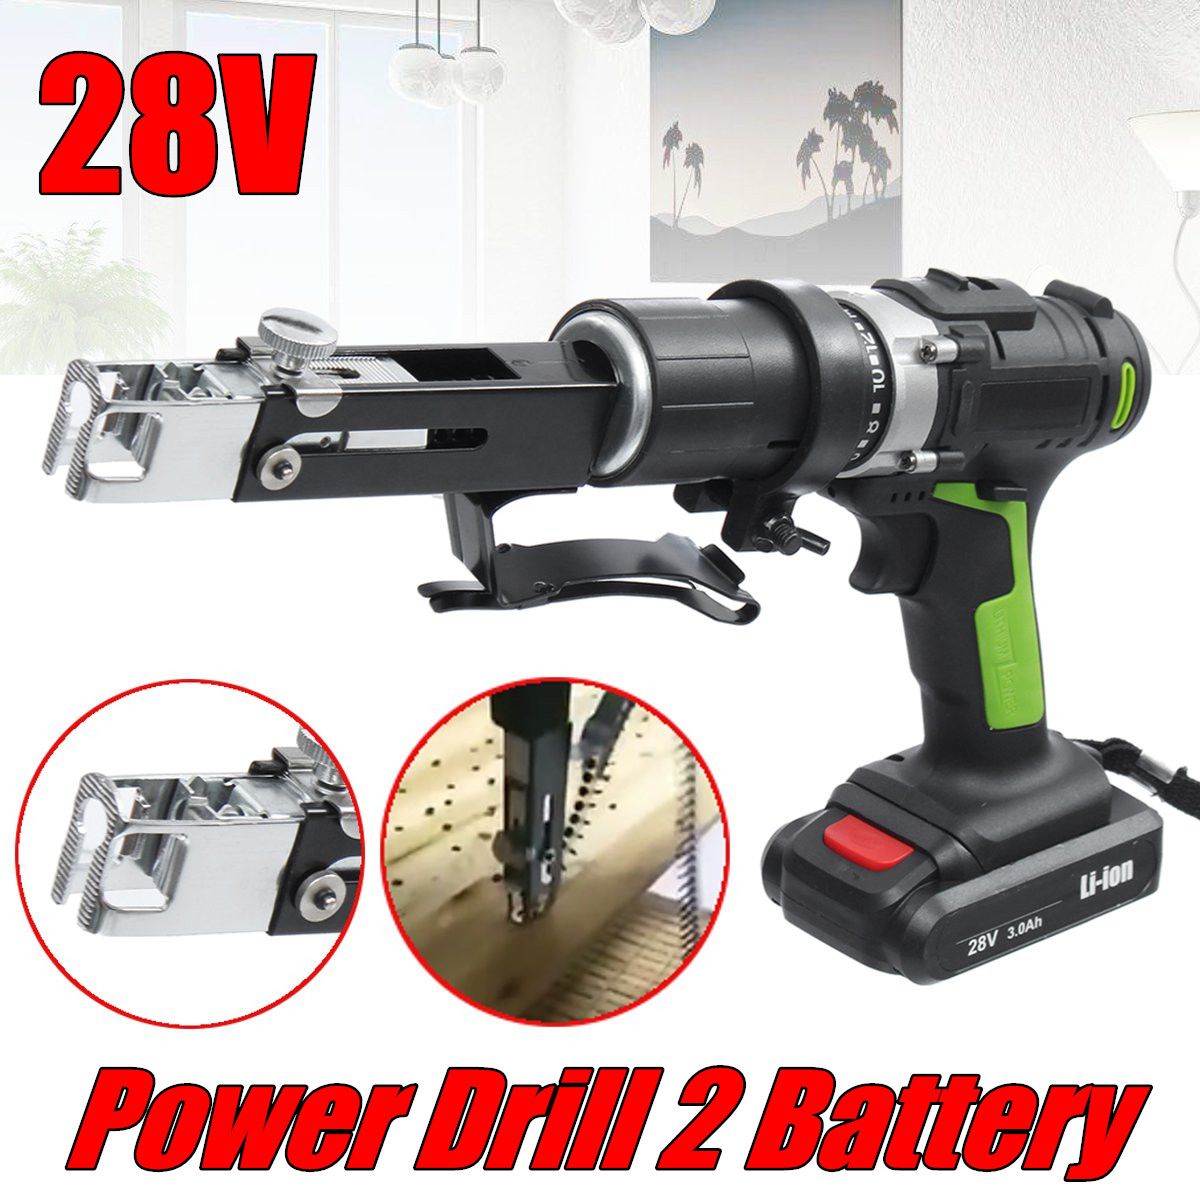 28V-Electric-Chain-Drill-Power-Drills-Chain-Gun-Rechargable-Elecreic-Drill-2-Batteries-1-Charger-1318858